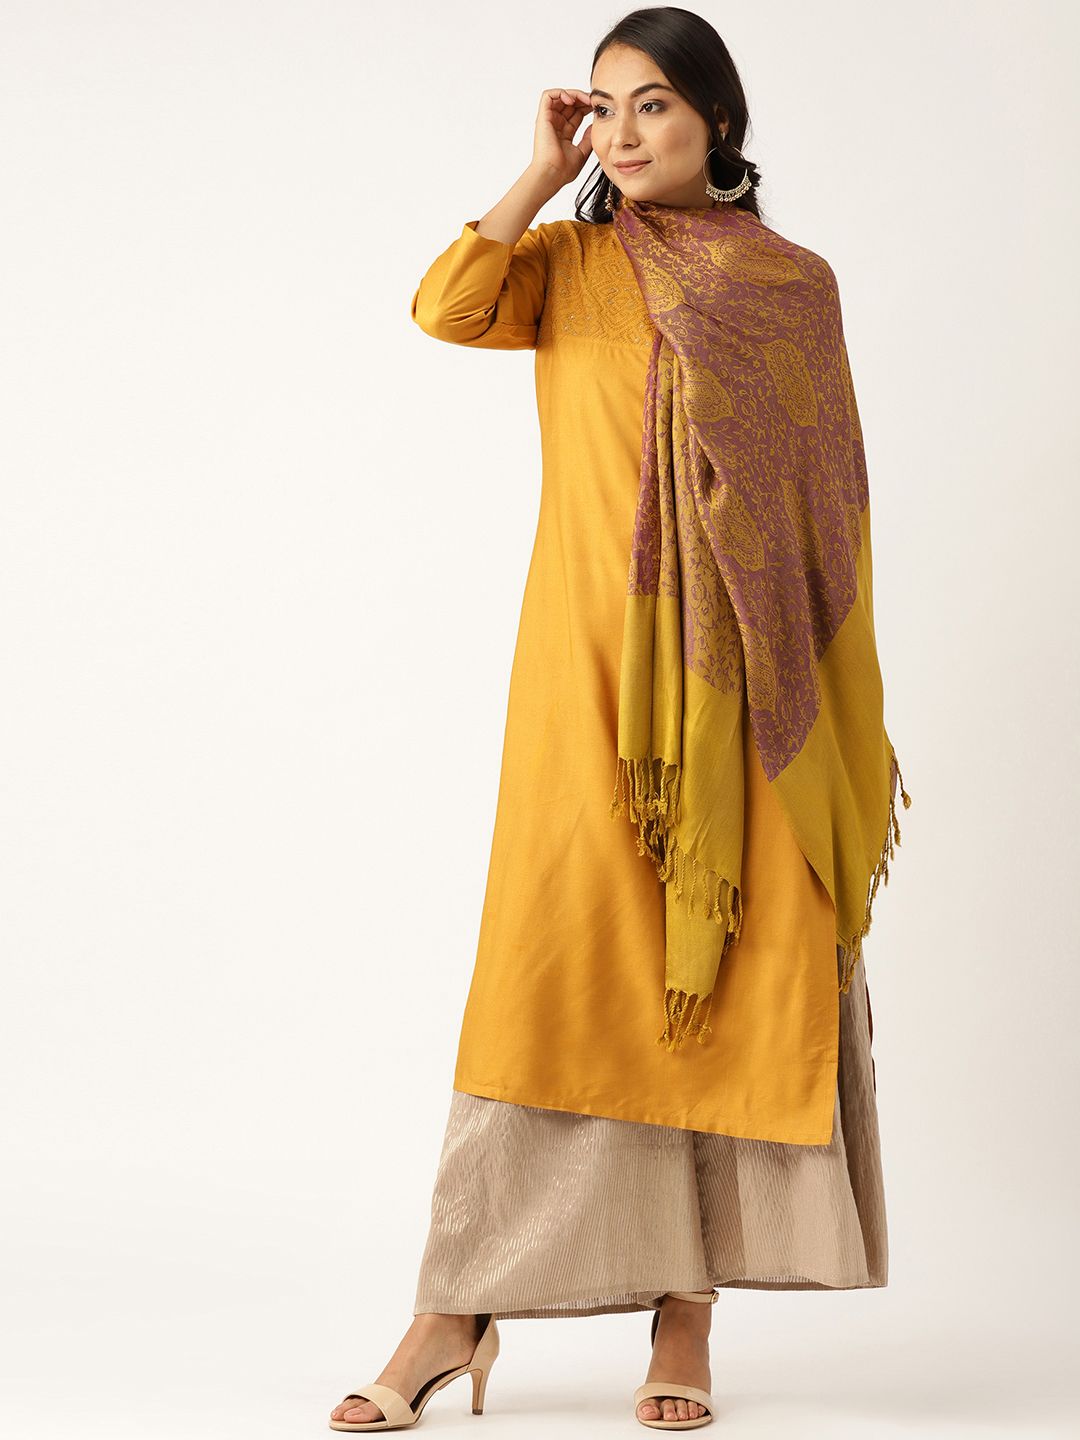 Shae by SASSAFRAS Women Purple & Mustard Yellow Woven Design Jacquard Stole Price in India